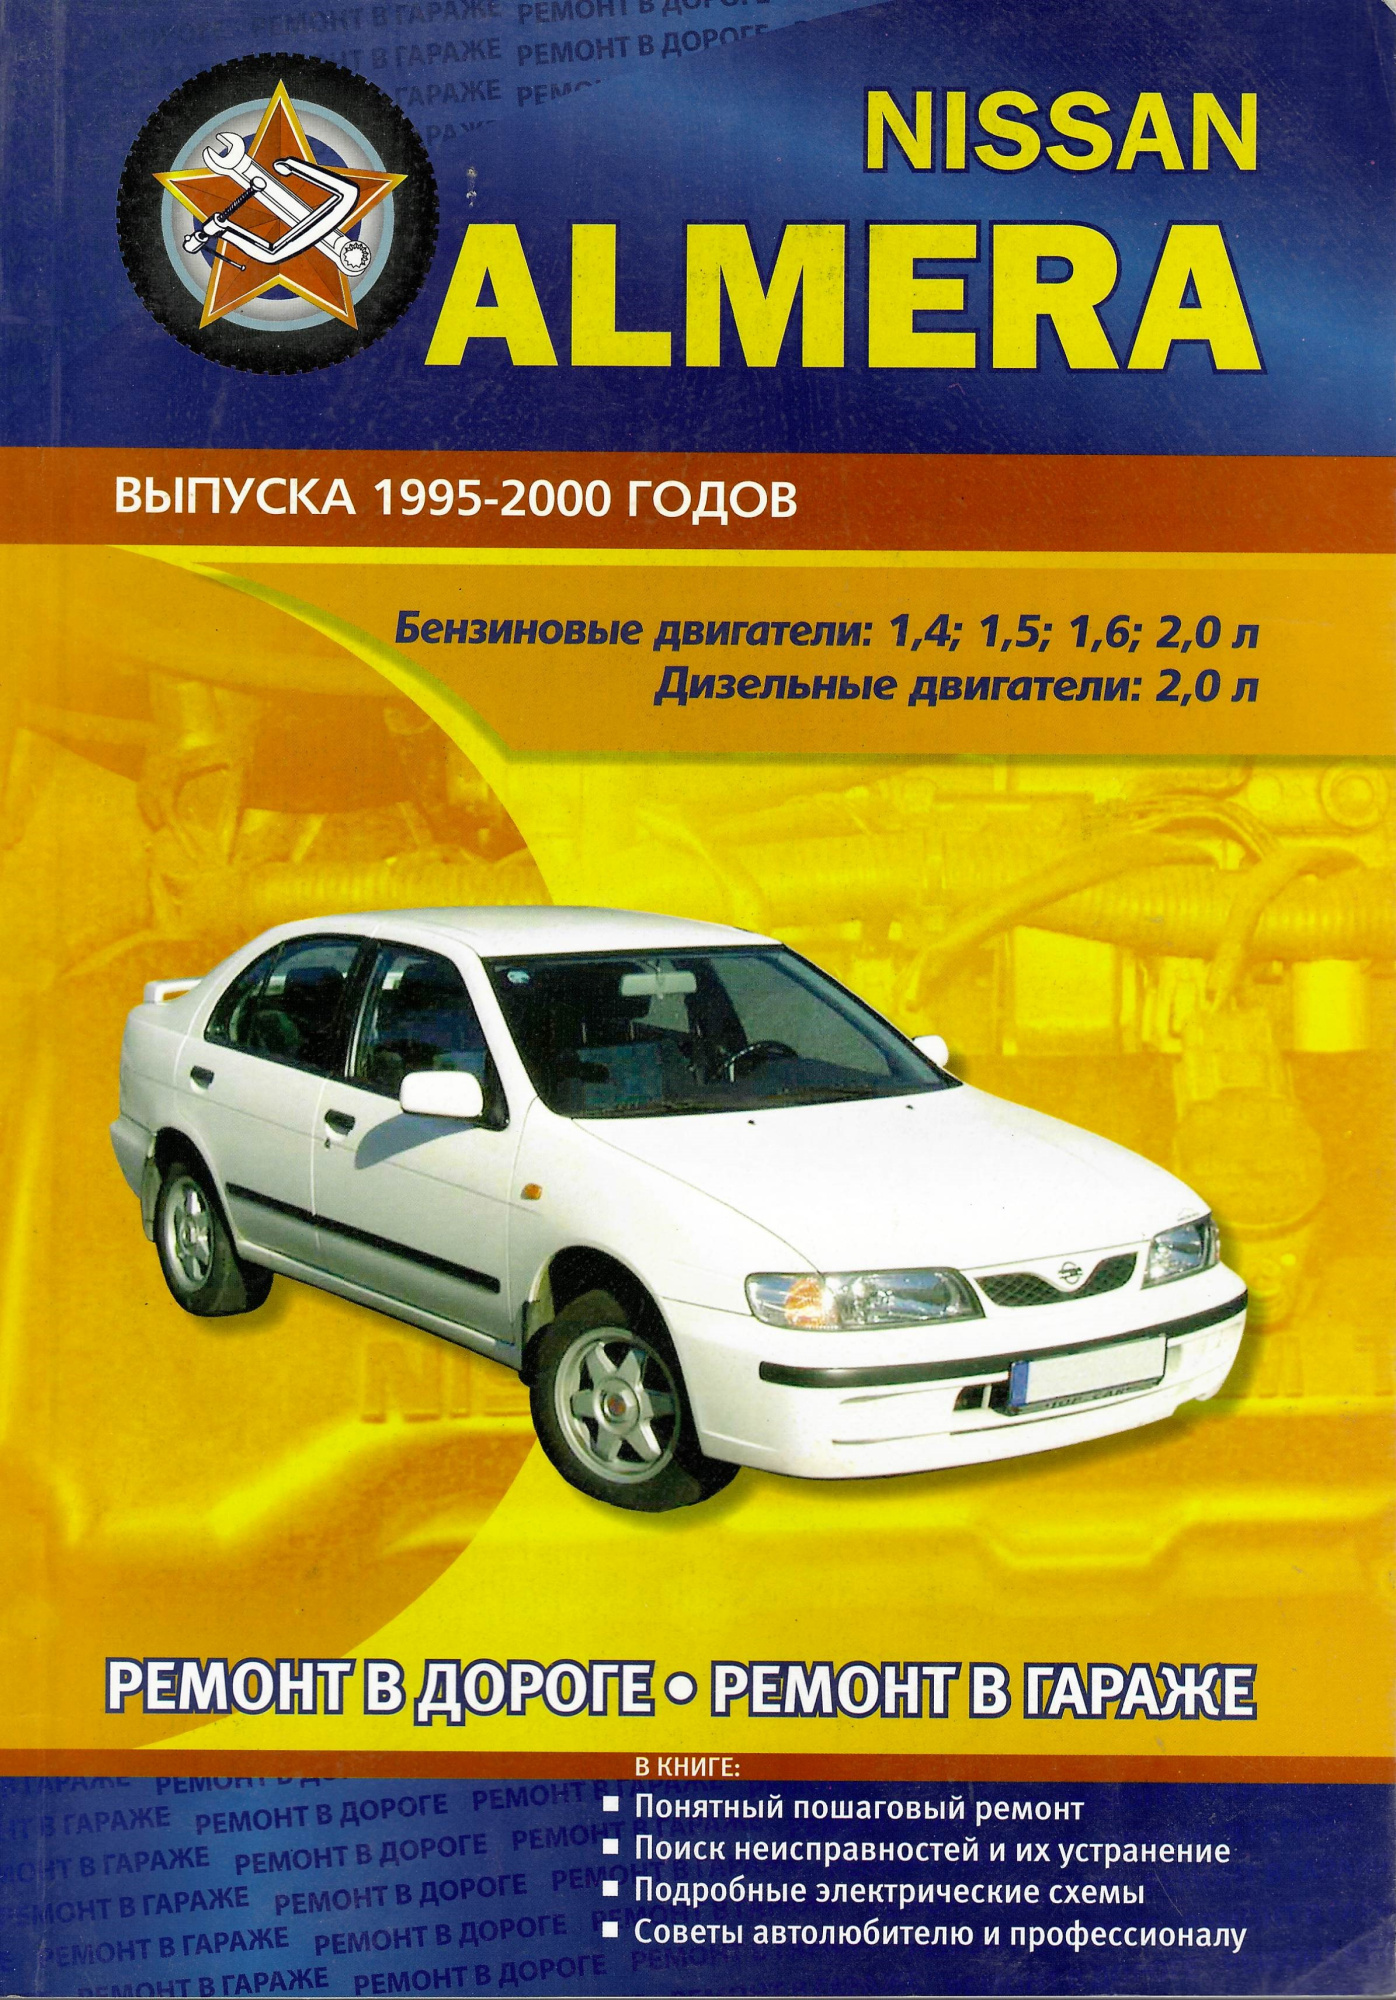 Nissan Almera 1995-2000. Книга, руководство по ремонту и эксплуатации. Сверчокъ